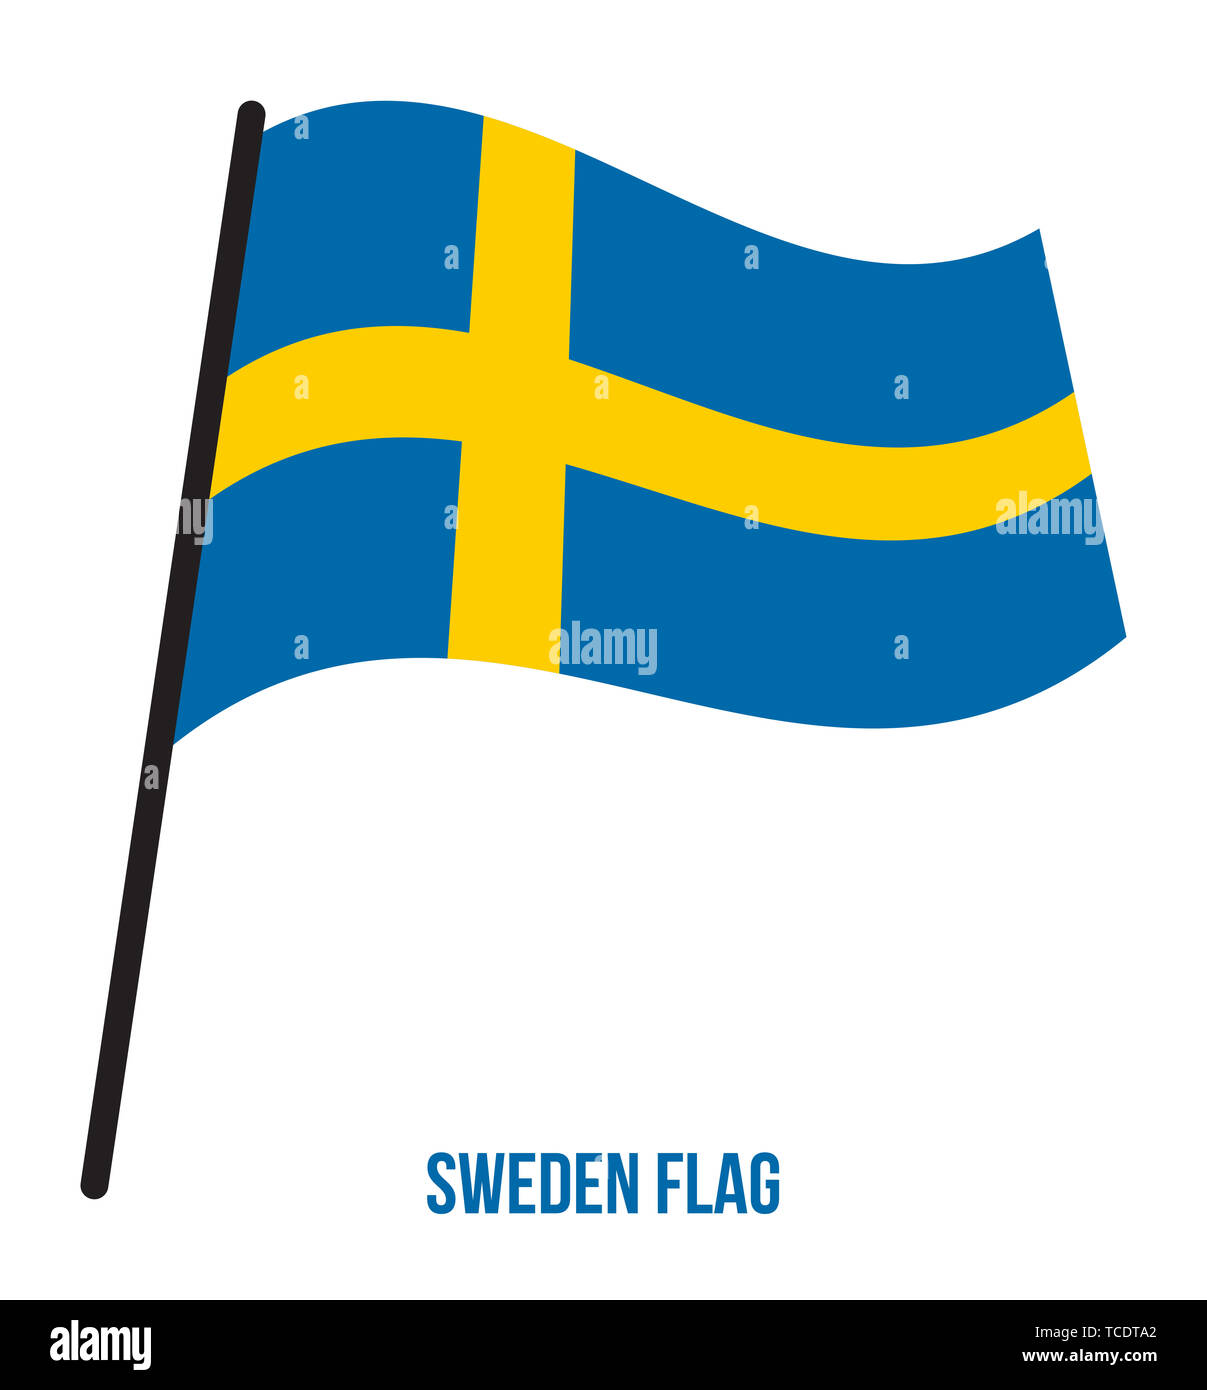 Sweden Flag Waving Vector Illustration on White Background. Sweden National Flag. Stock Photo